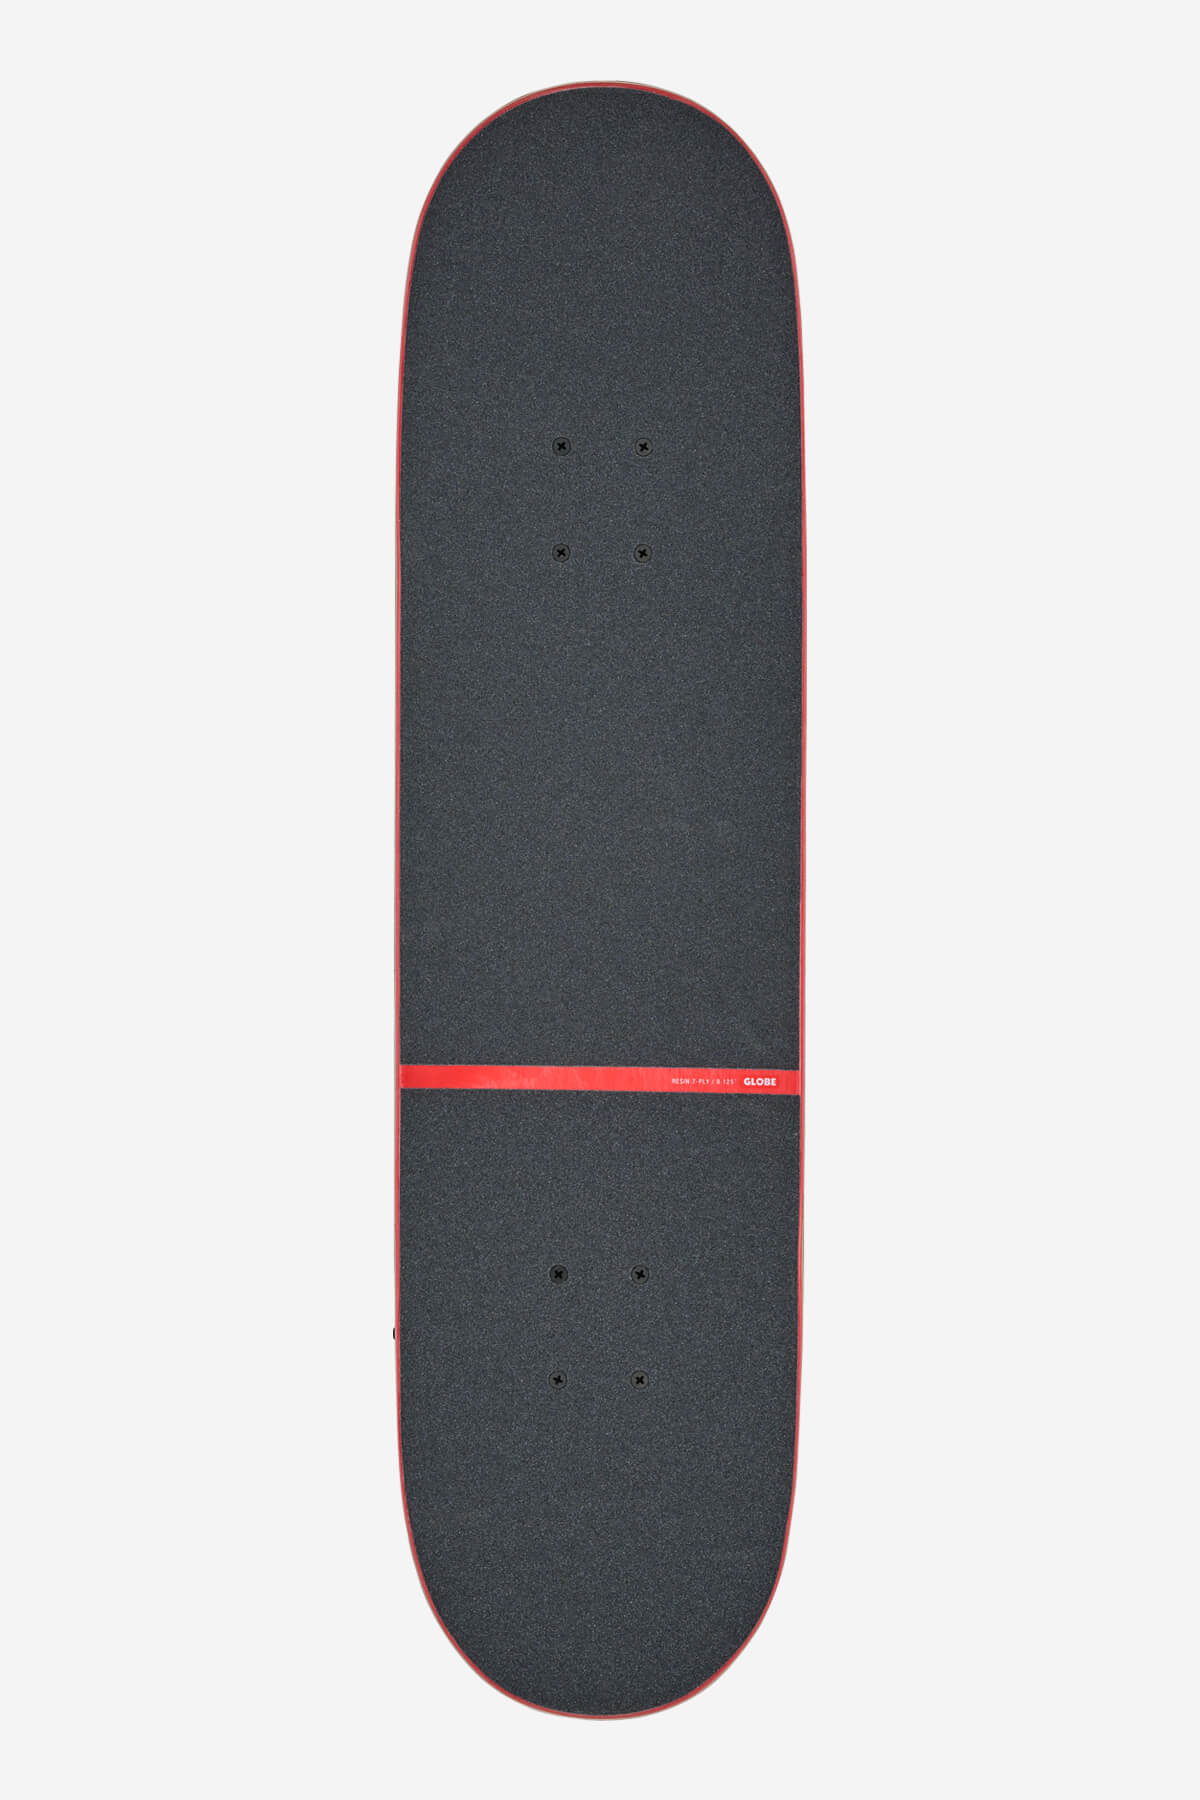 Globe - G1 Stack - Künstlicher Wahnsinn - 8.125" Komplett Skateboard